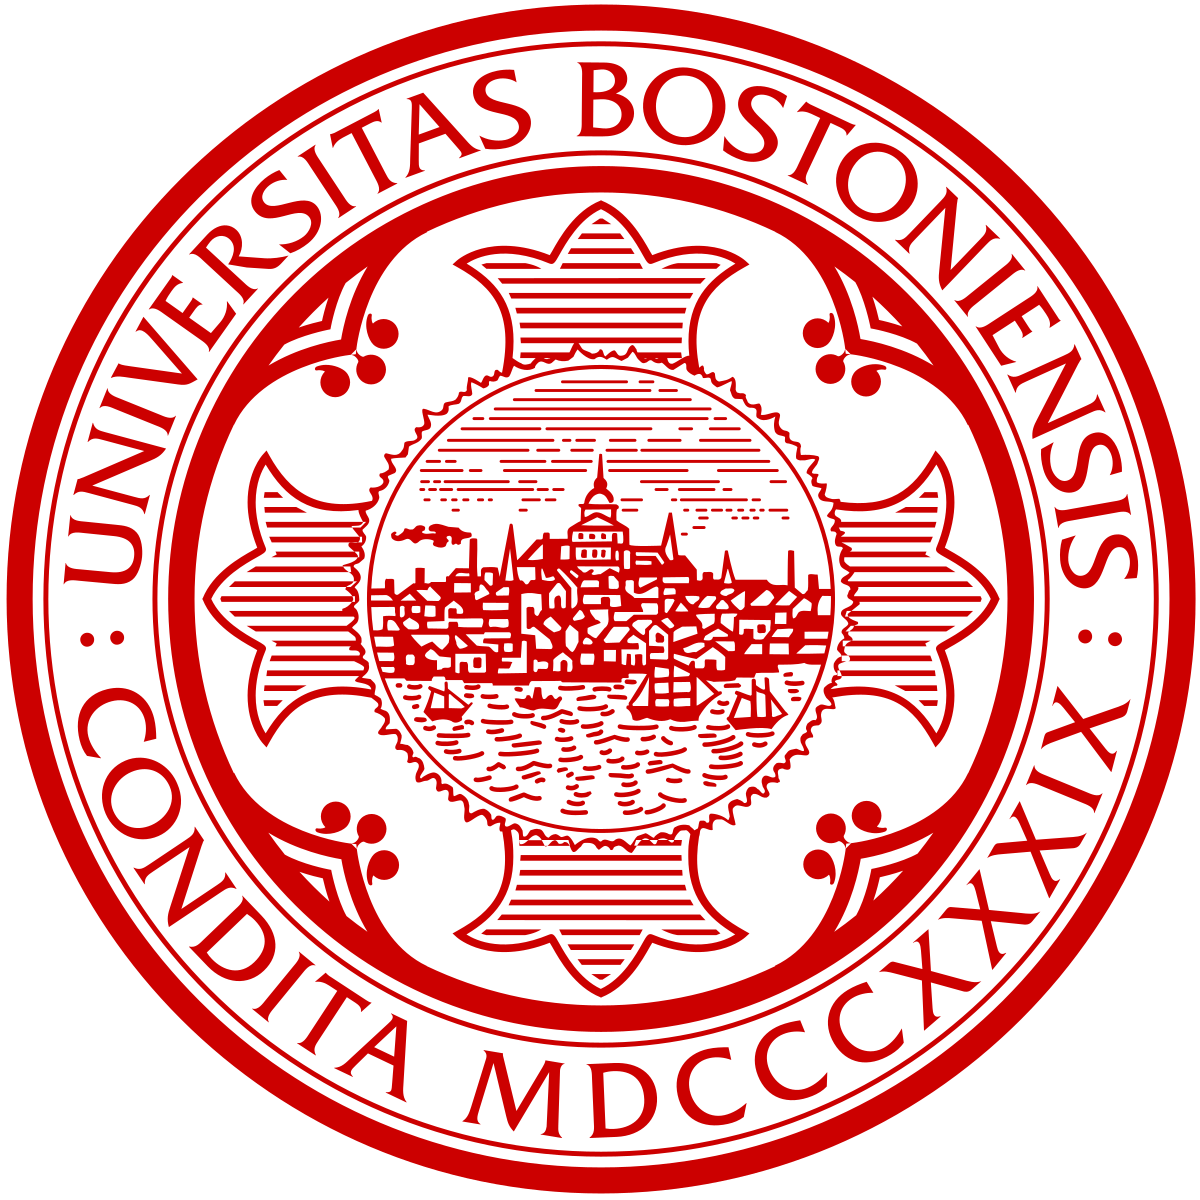 Boston U Logo - Boston University